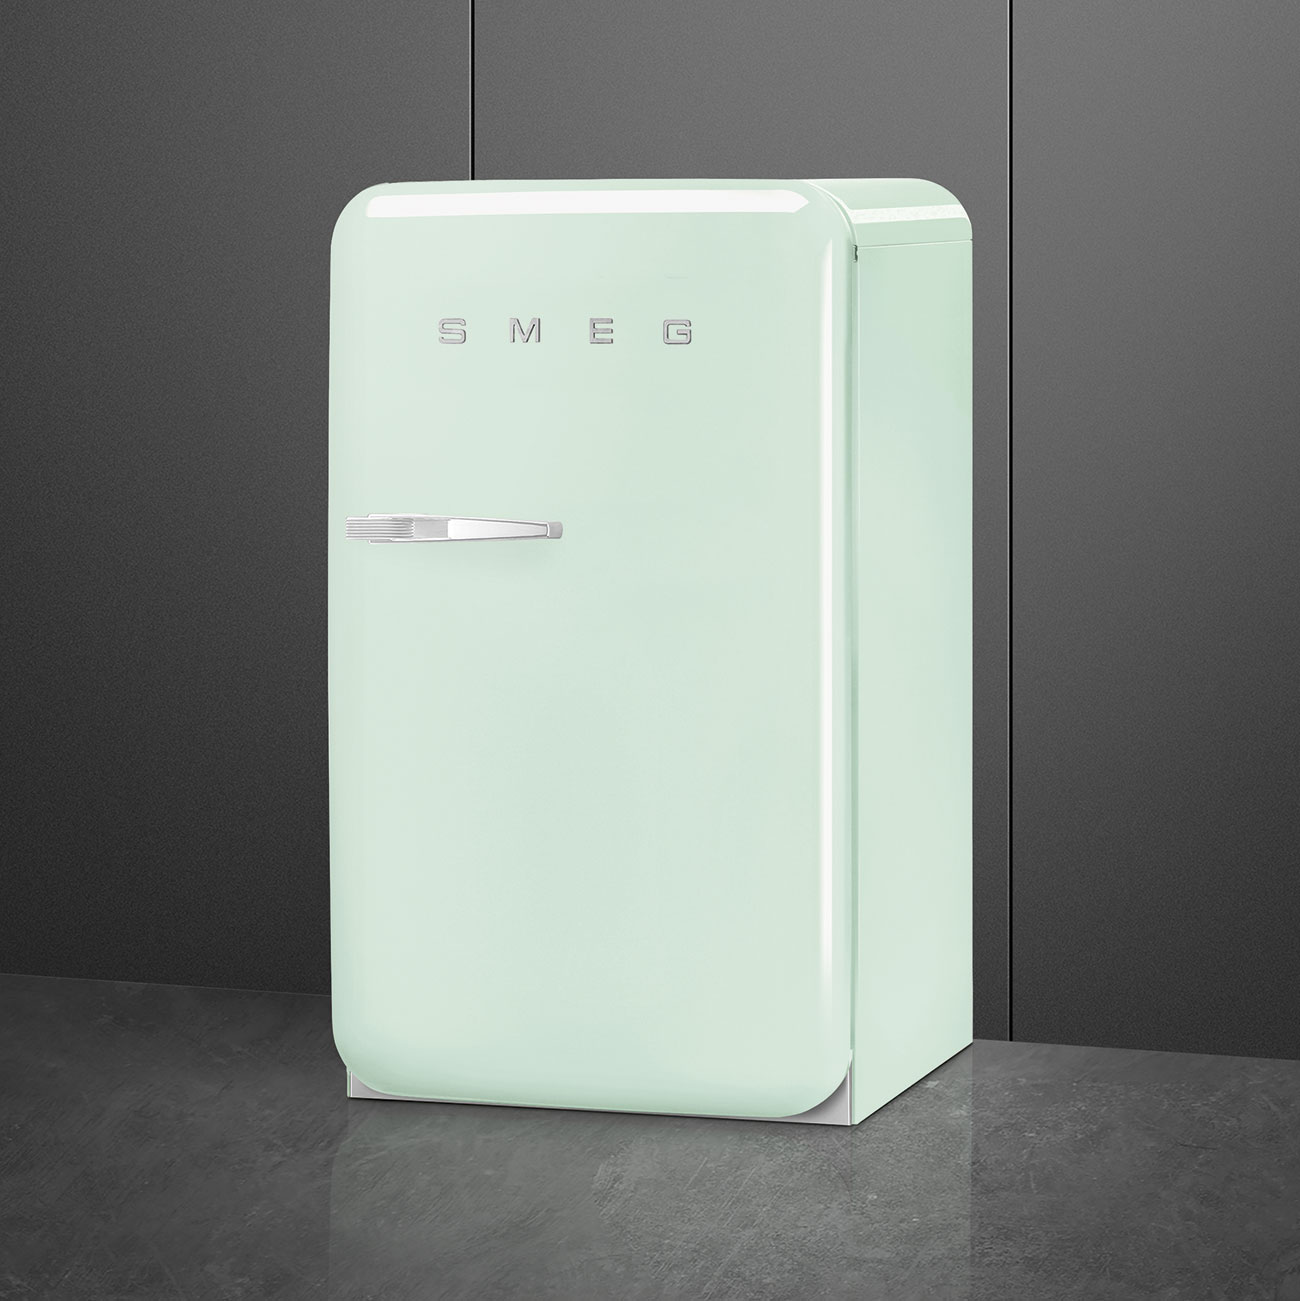 Pastel green refrigerator - Smeg_4